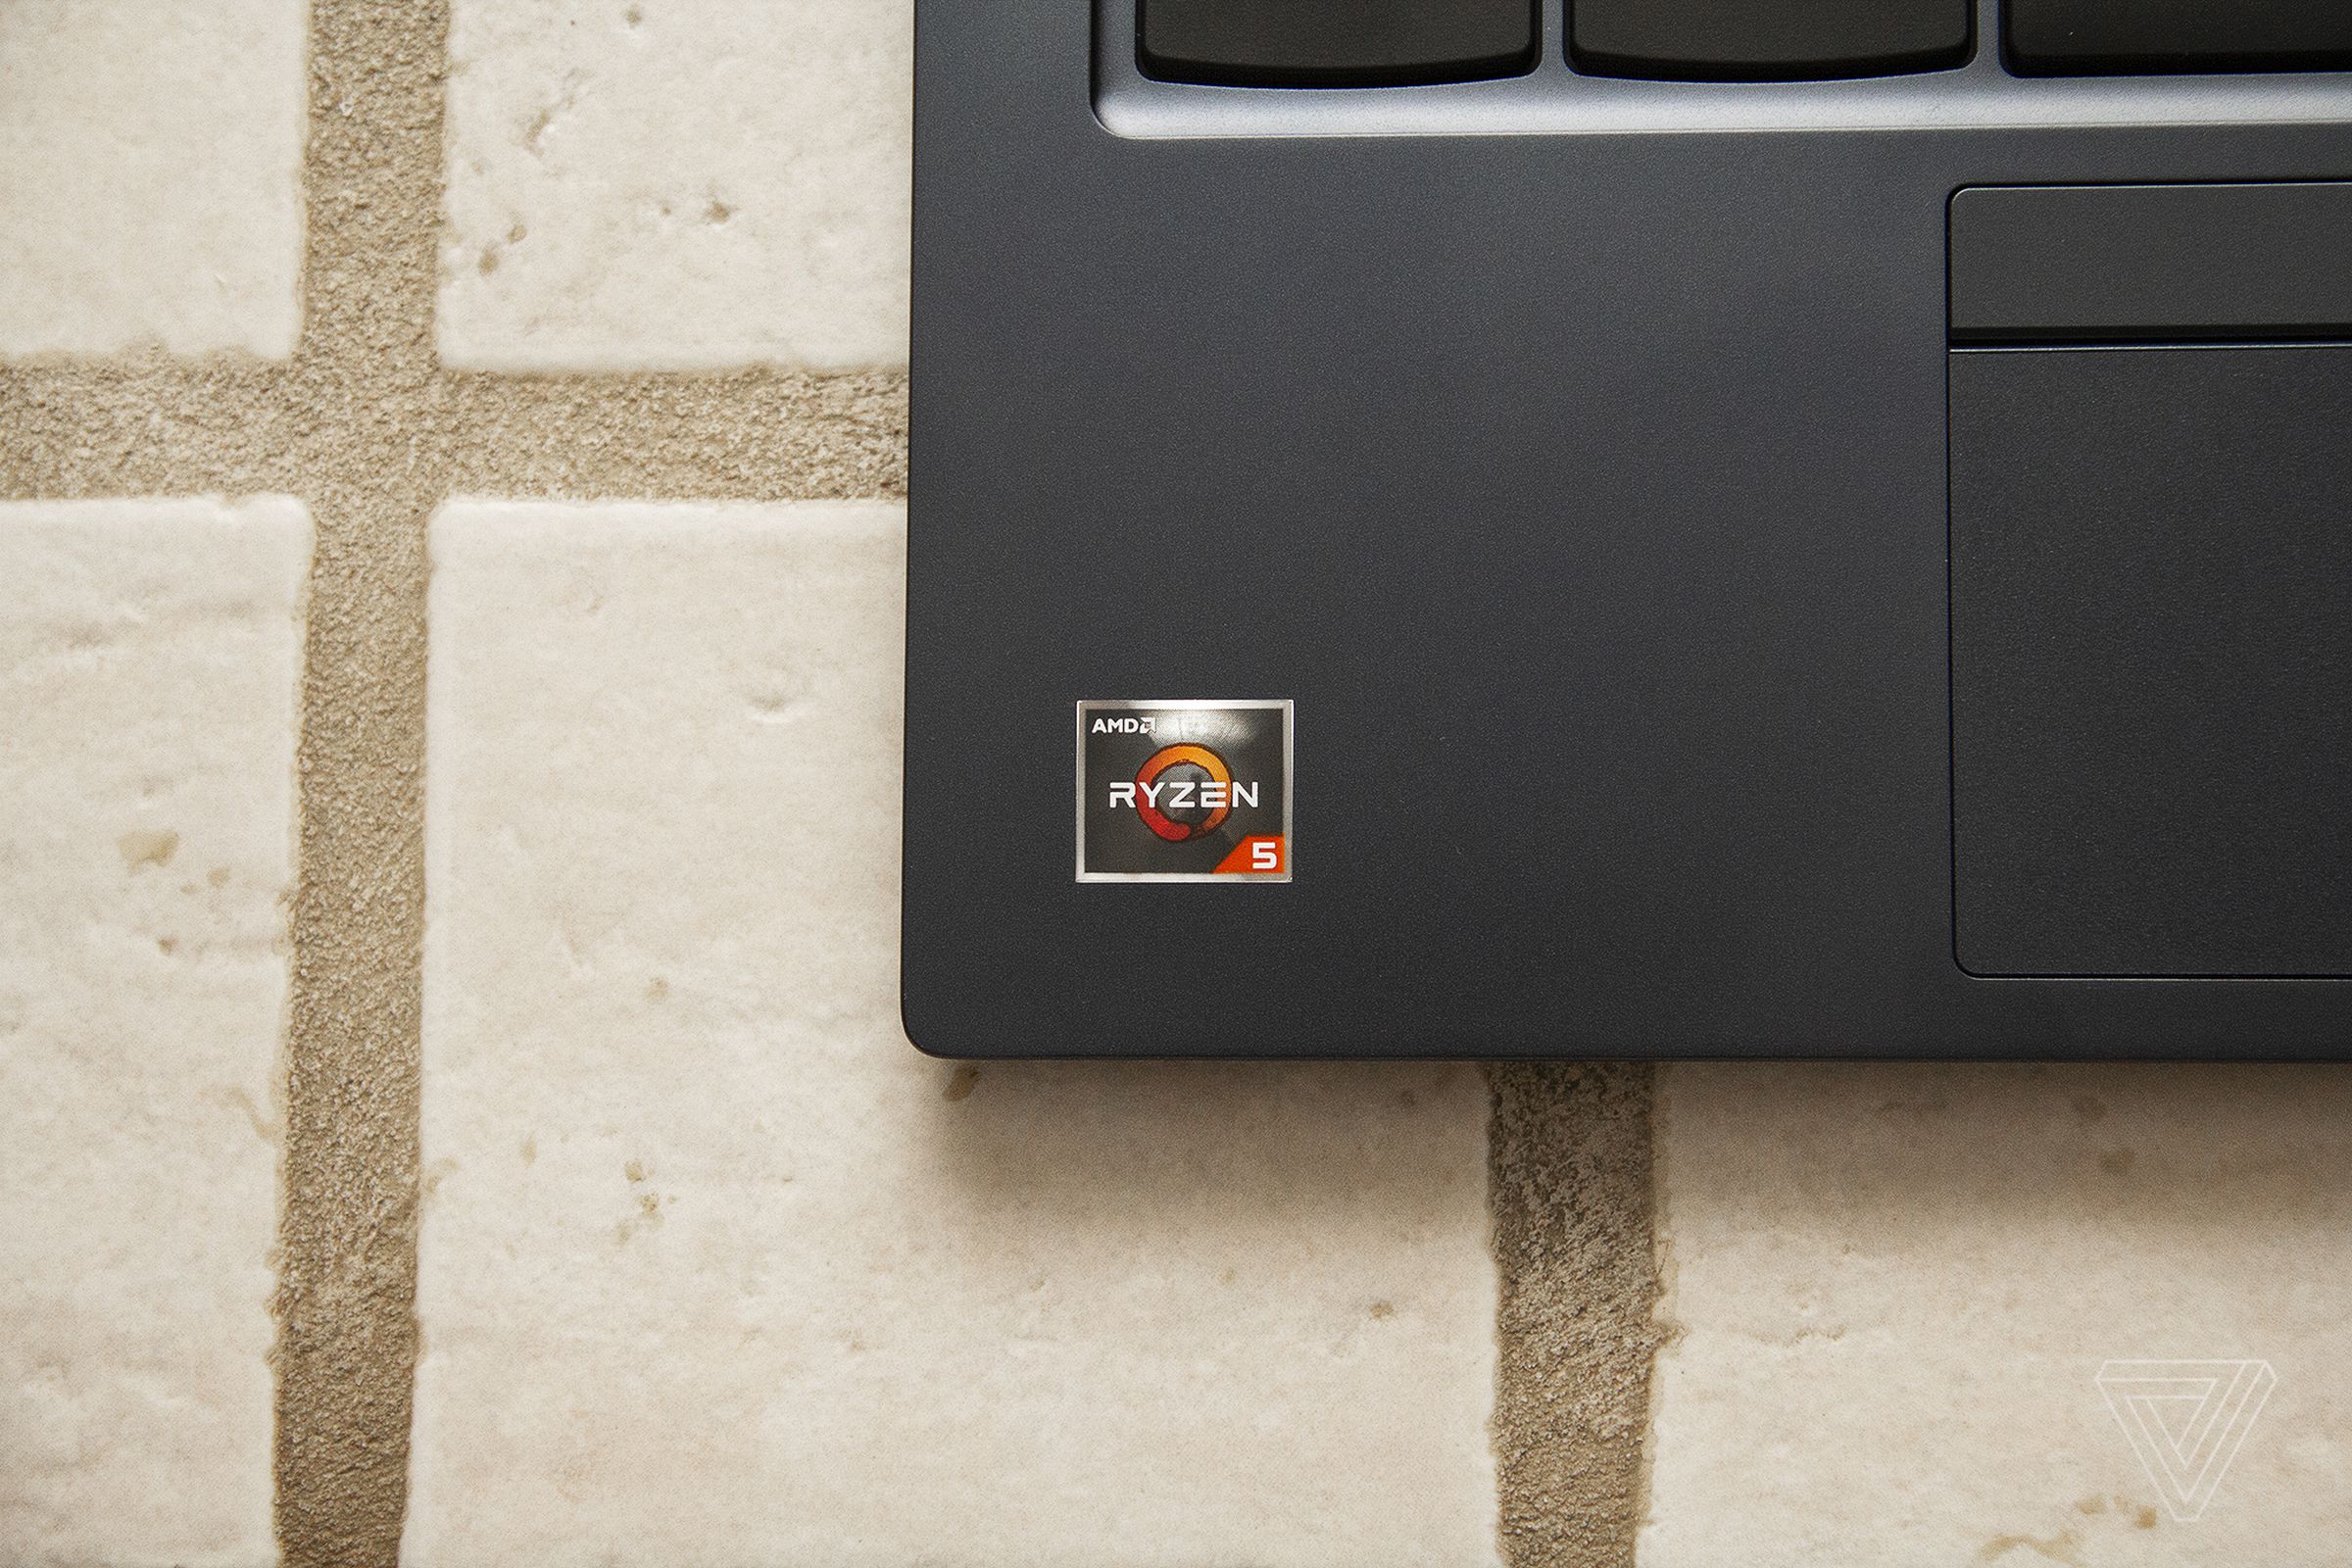 The AMD Ryzen 5 sticker on the bottom left corner of the ThinkPad C13 Yoga Chromebook.